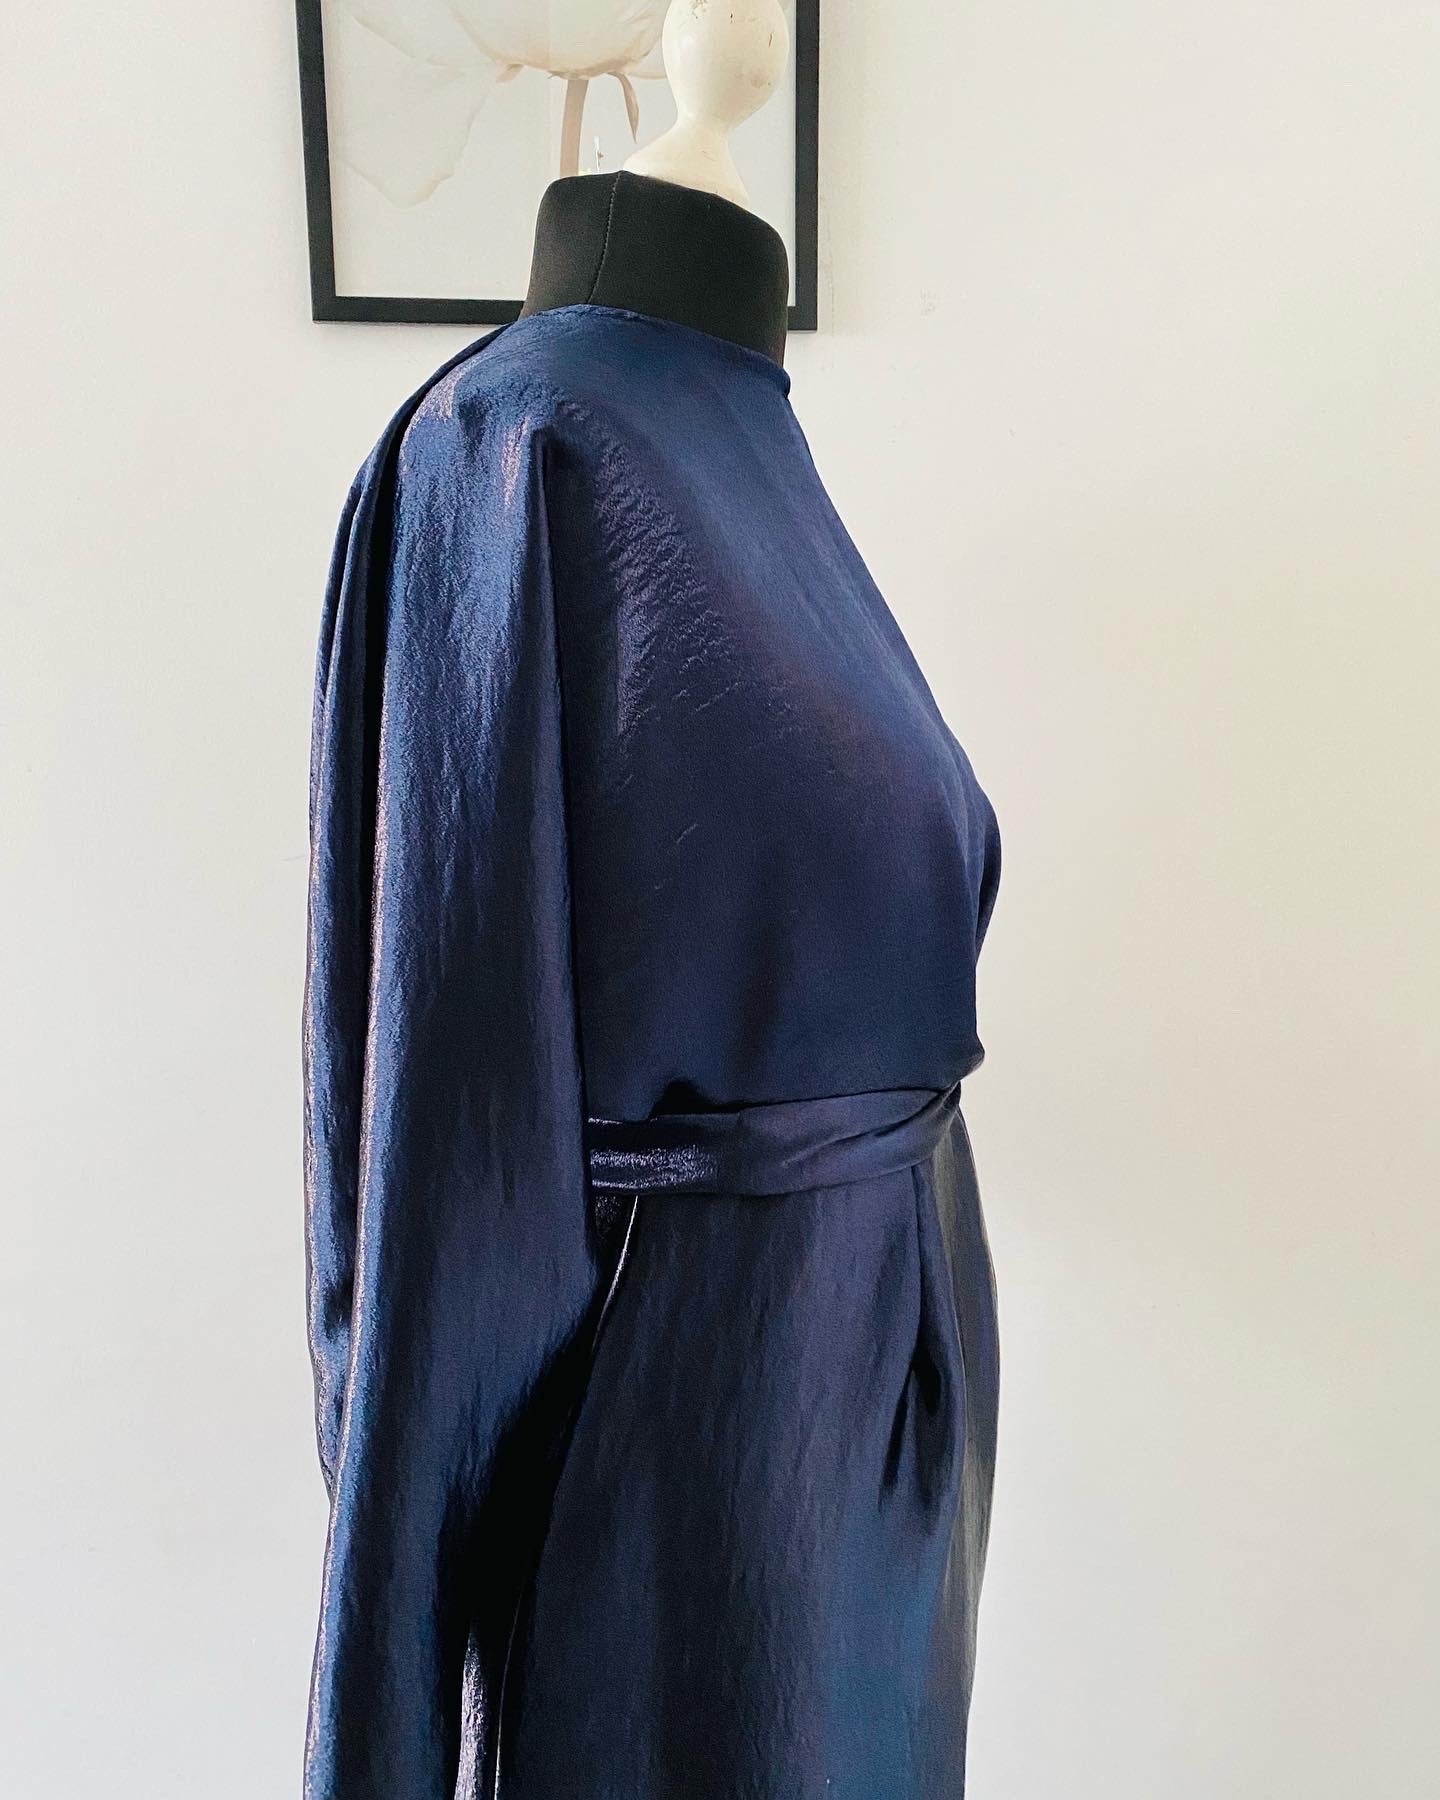 Robe demoiselle d’honneur manches longues - Robe Modest wear - En Satin bleu marine - Kaysol Couture